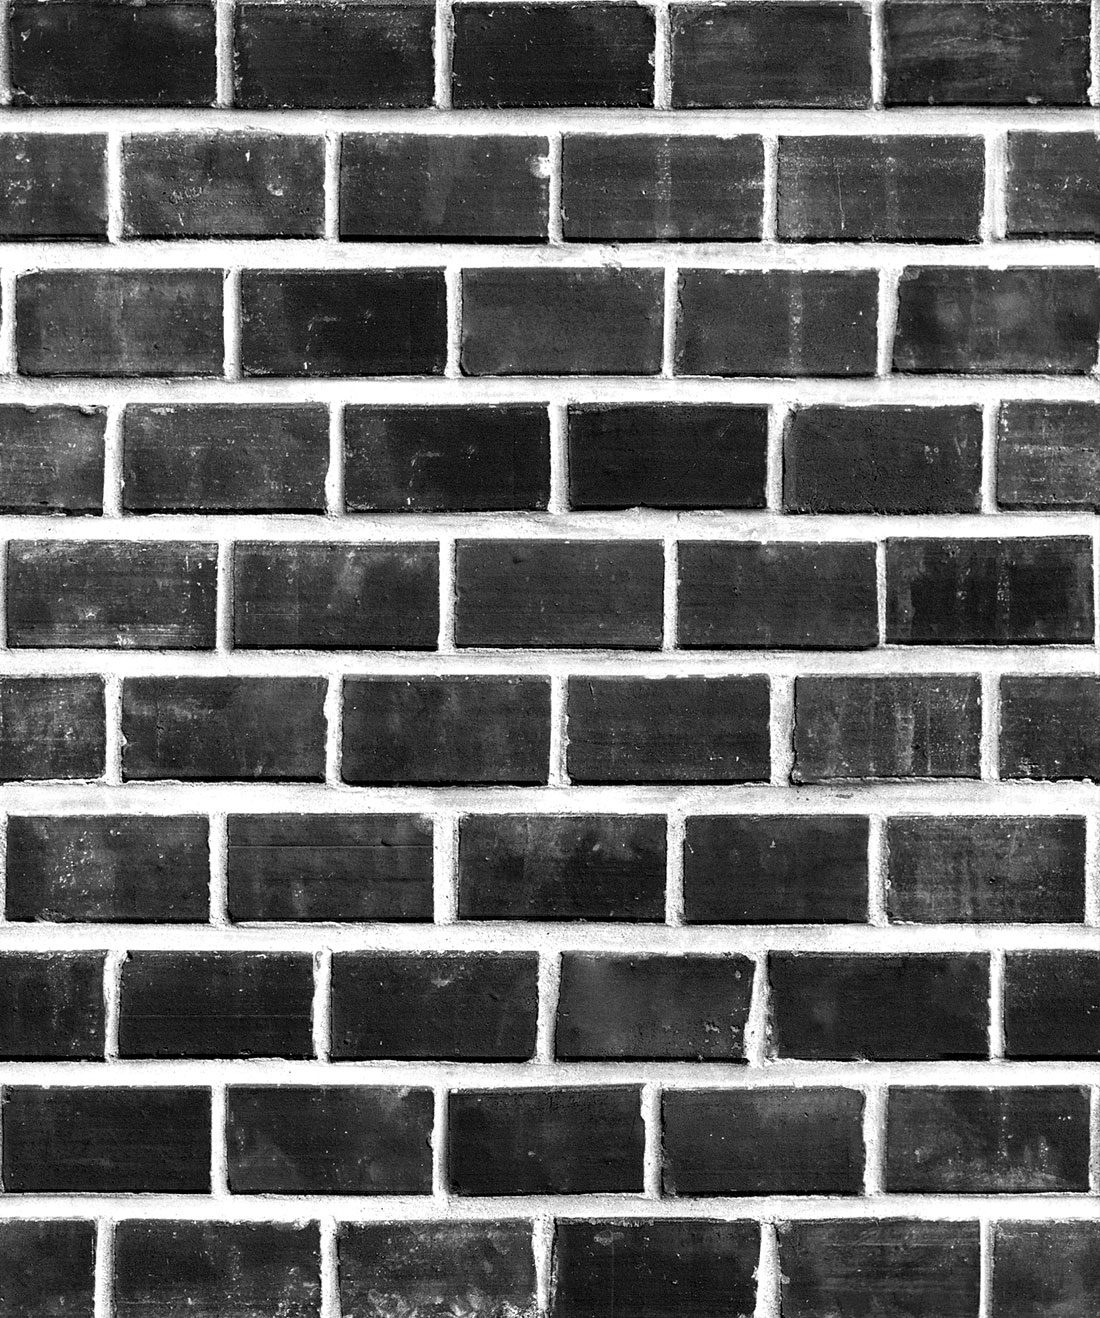 Lubeck Bricks Wallpaper Exposed Black Milton King